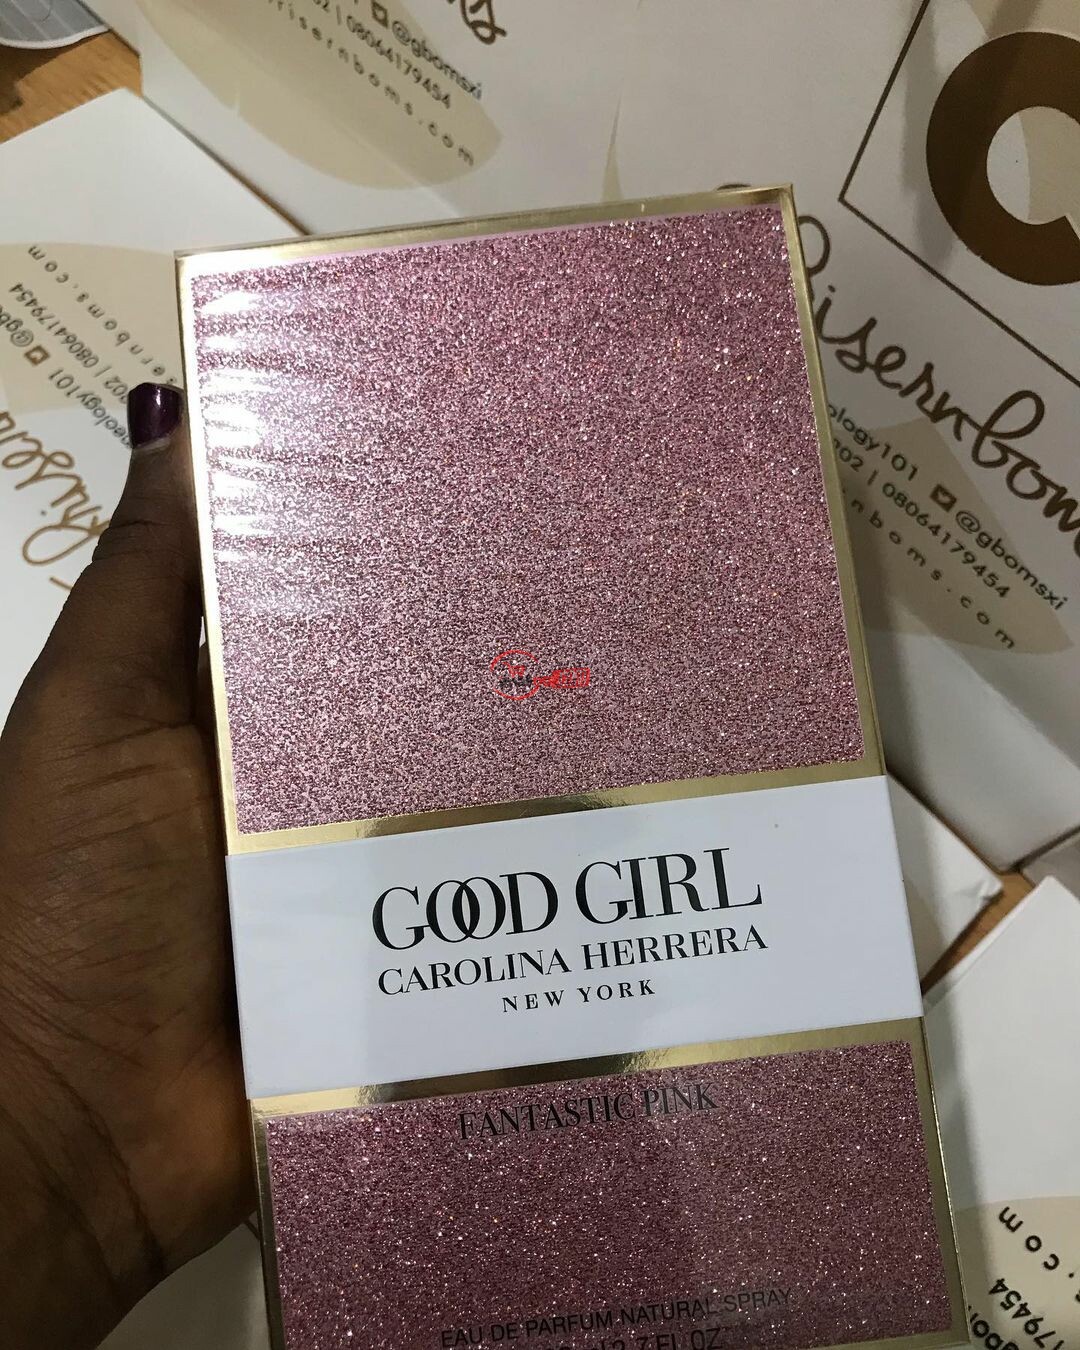 Good girl perfume